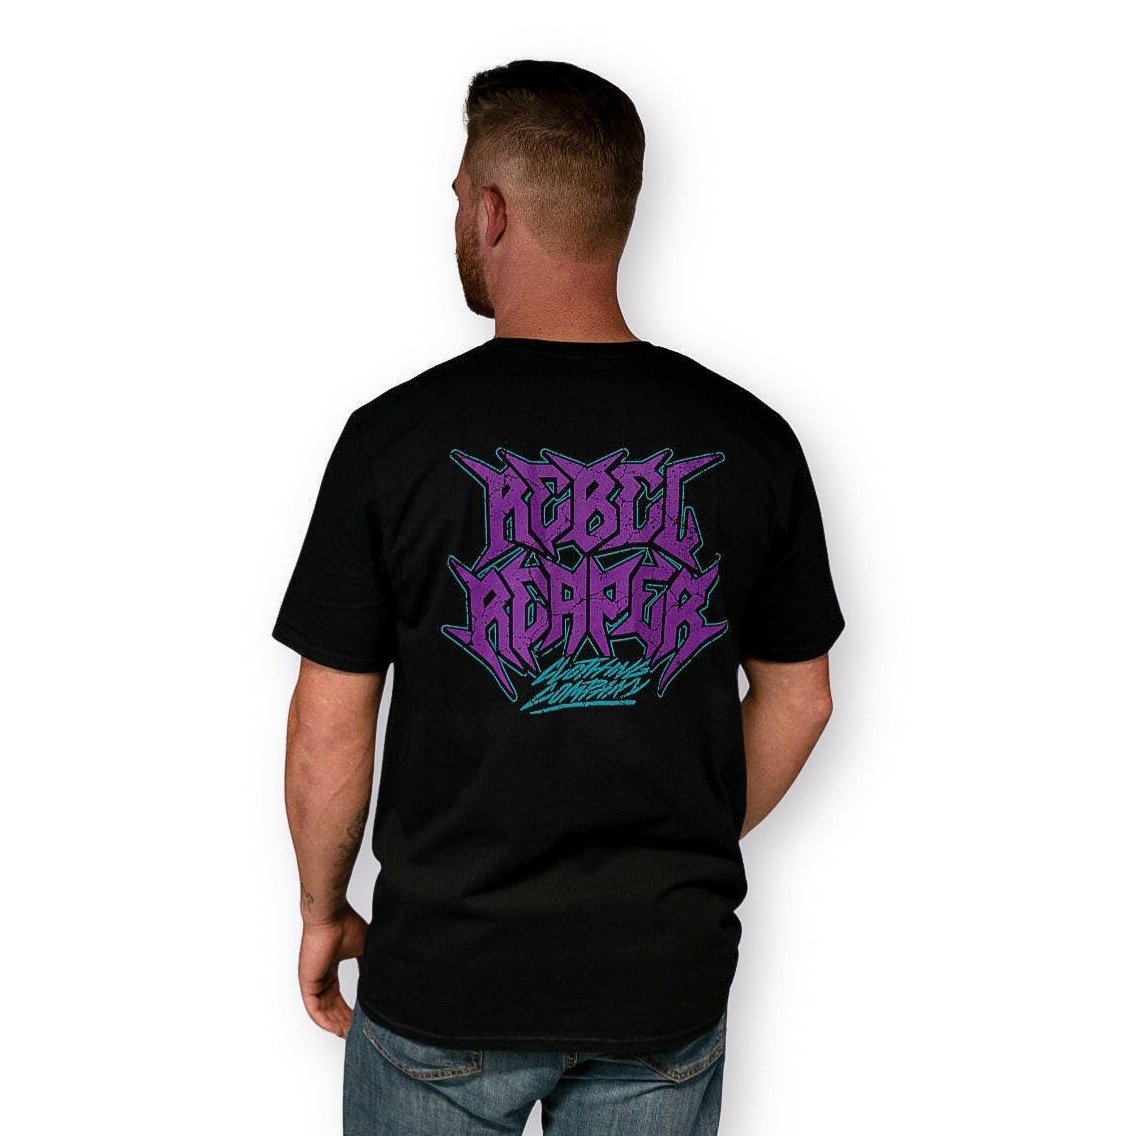 Purple Retro Rebel T-Shirt - Rebel Reaper Clothing Company T-Shirt